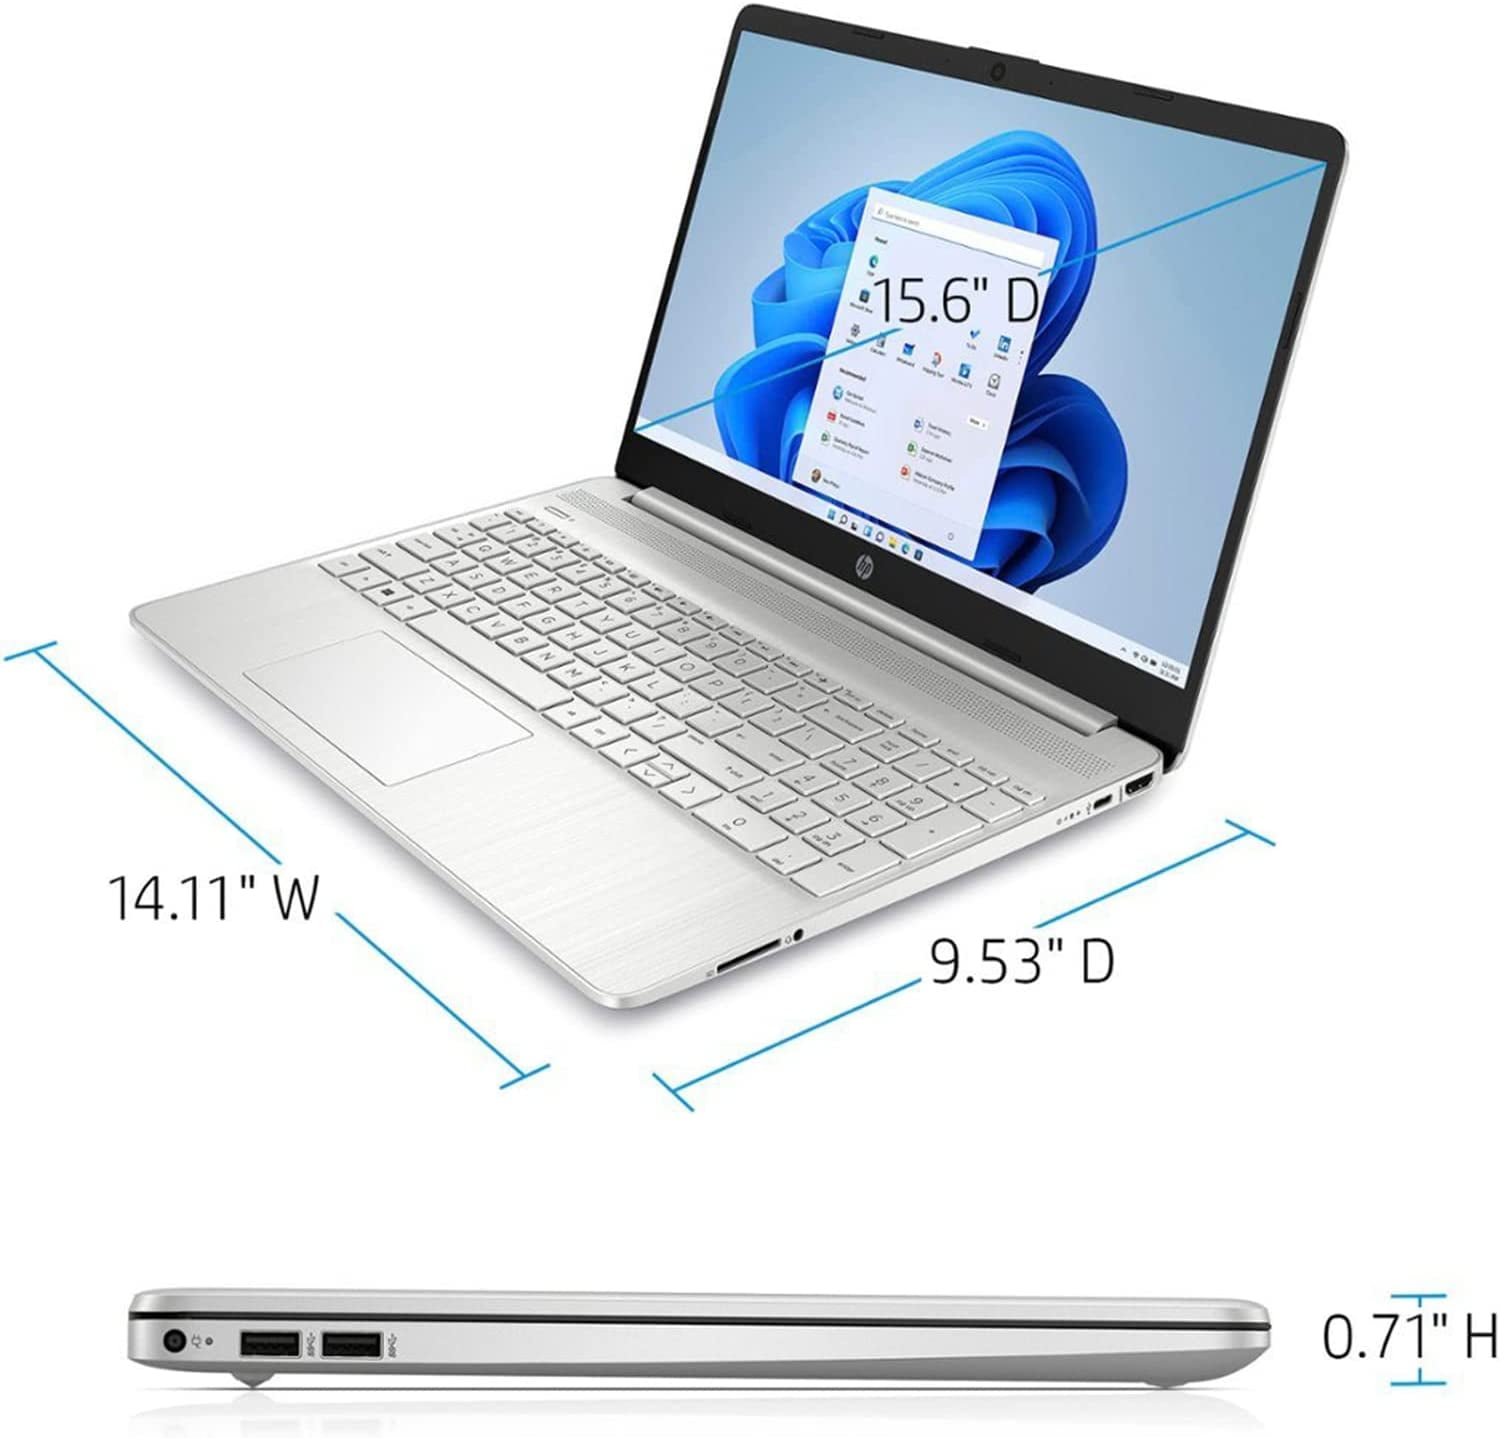 HP Business Laptop, 15.6